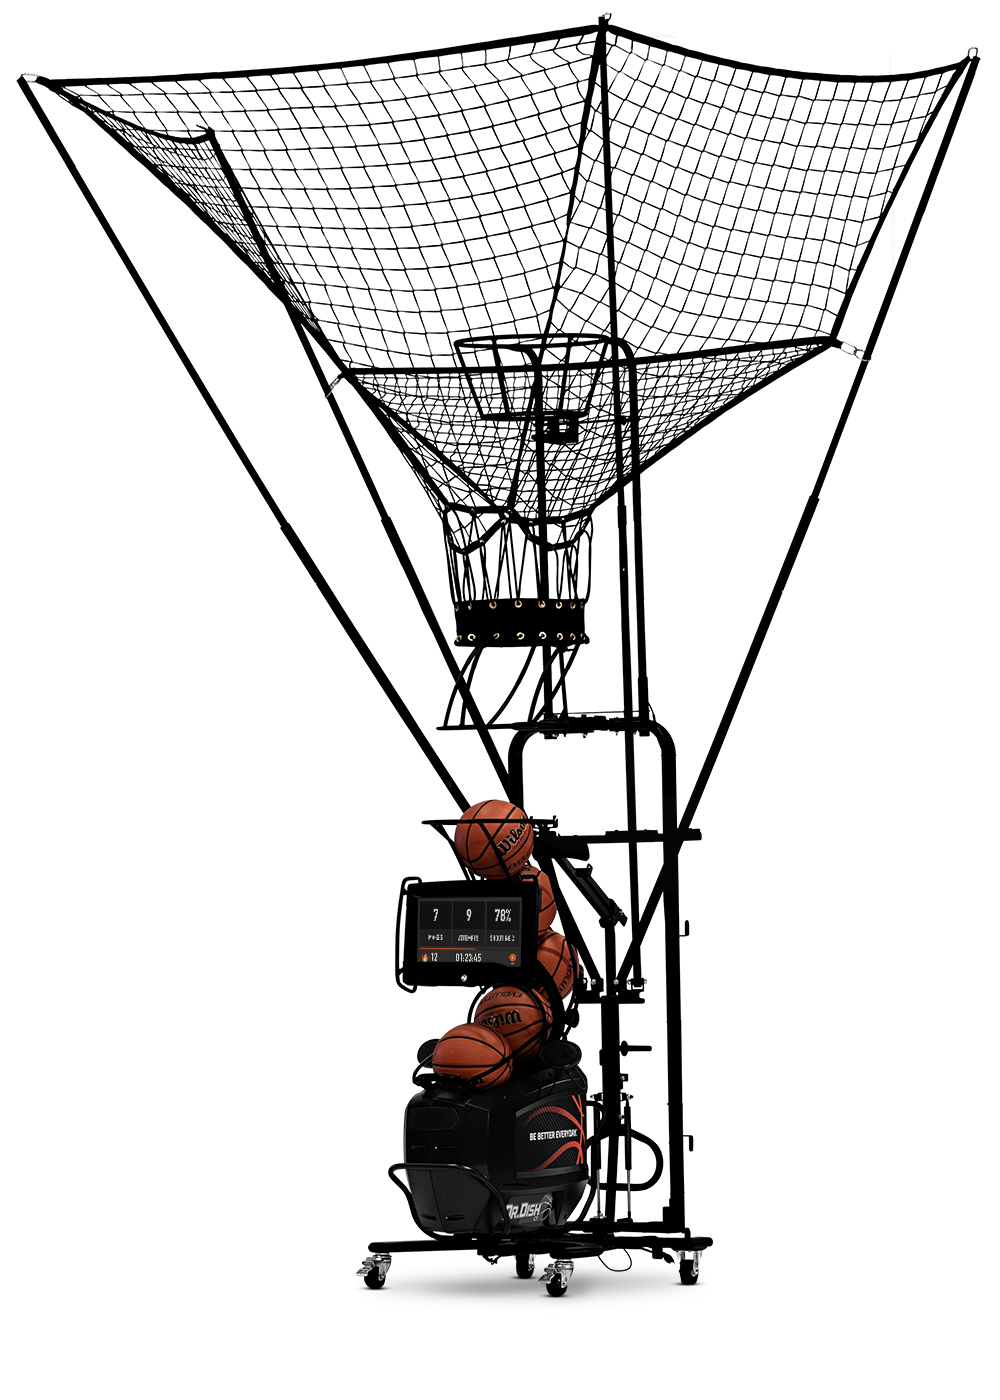 Dr. Dish CT Basketball Shooting Machine